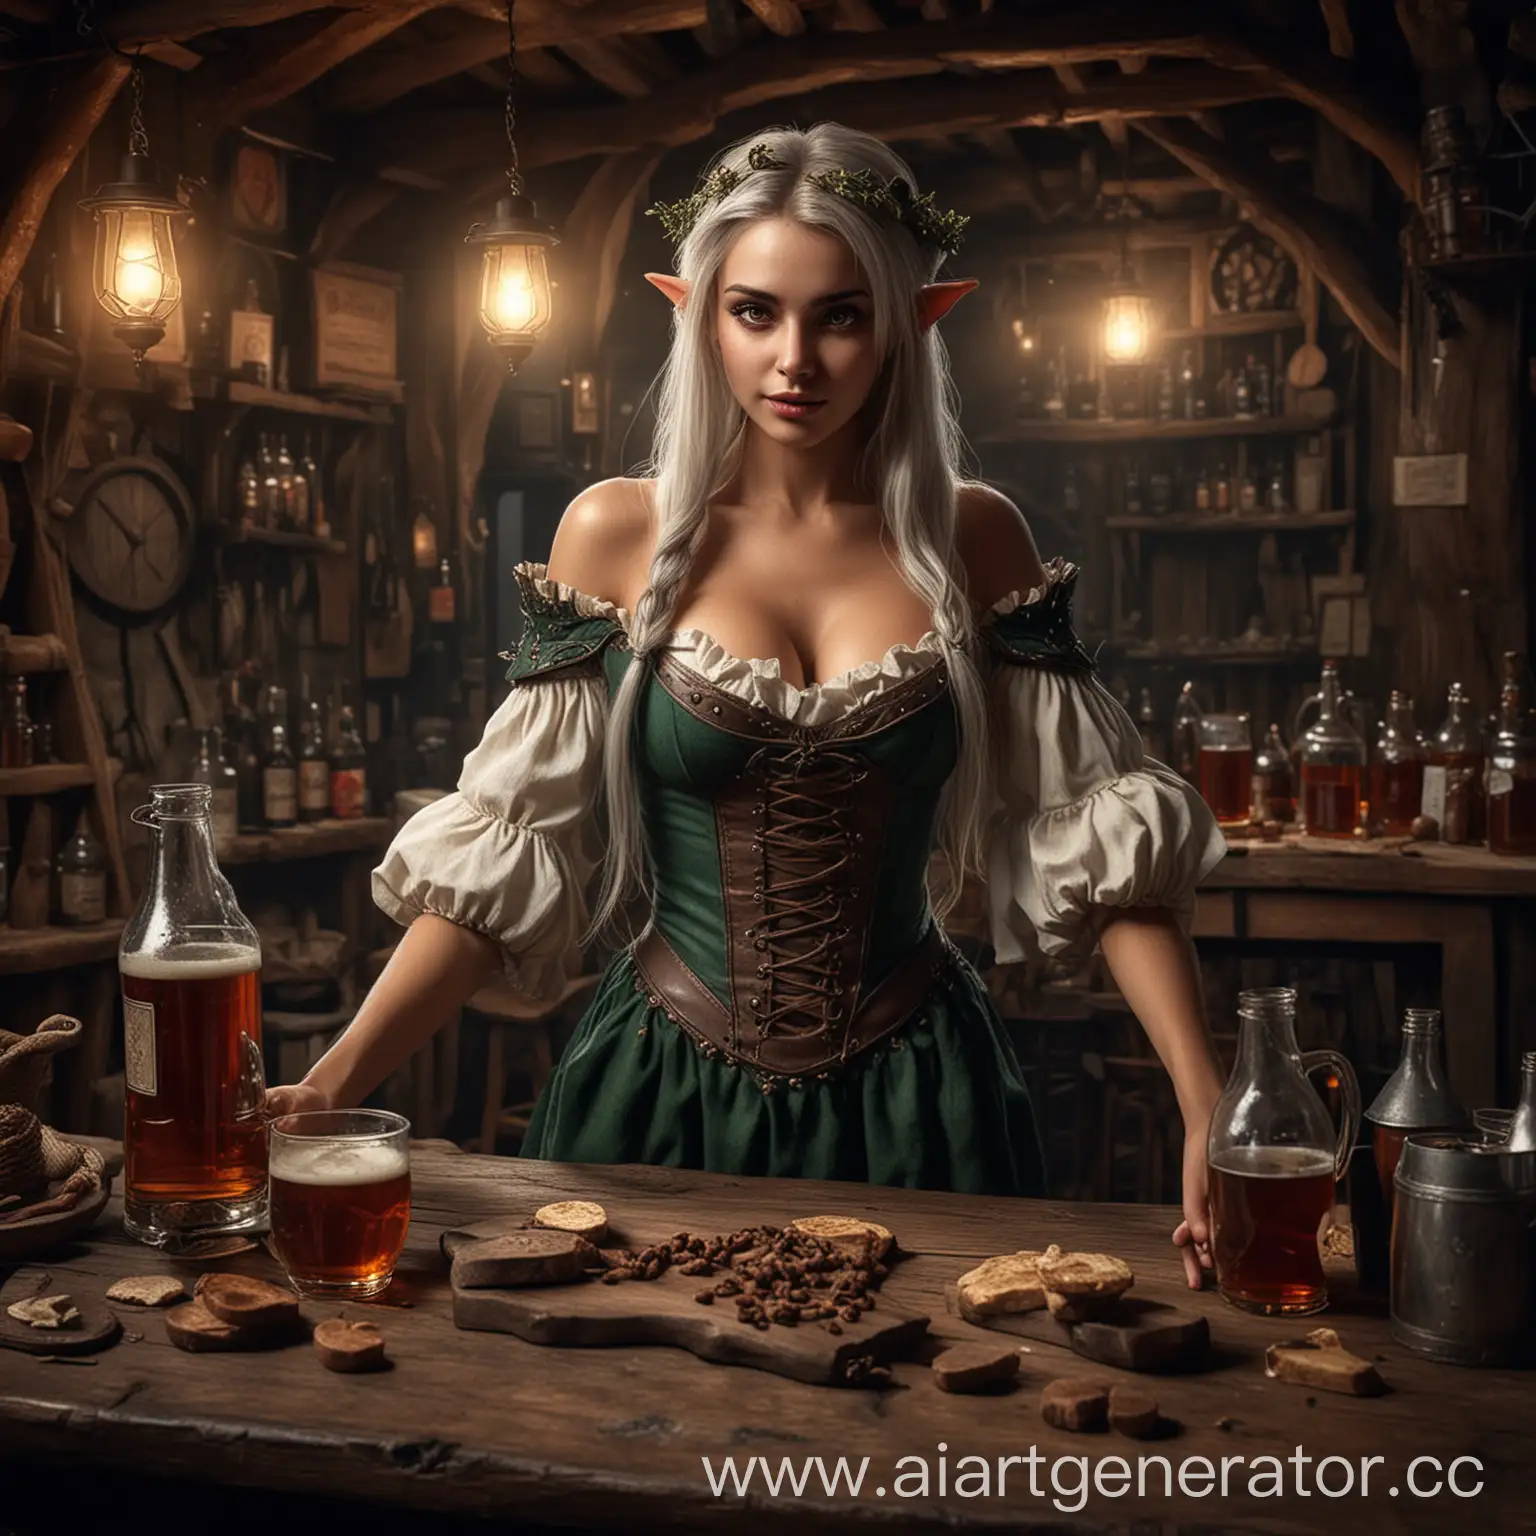 Elf-Spreading-Ale-in-a-Dark-Fantasy-Tavern